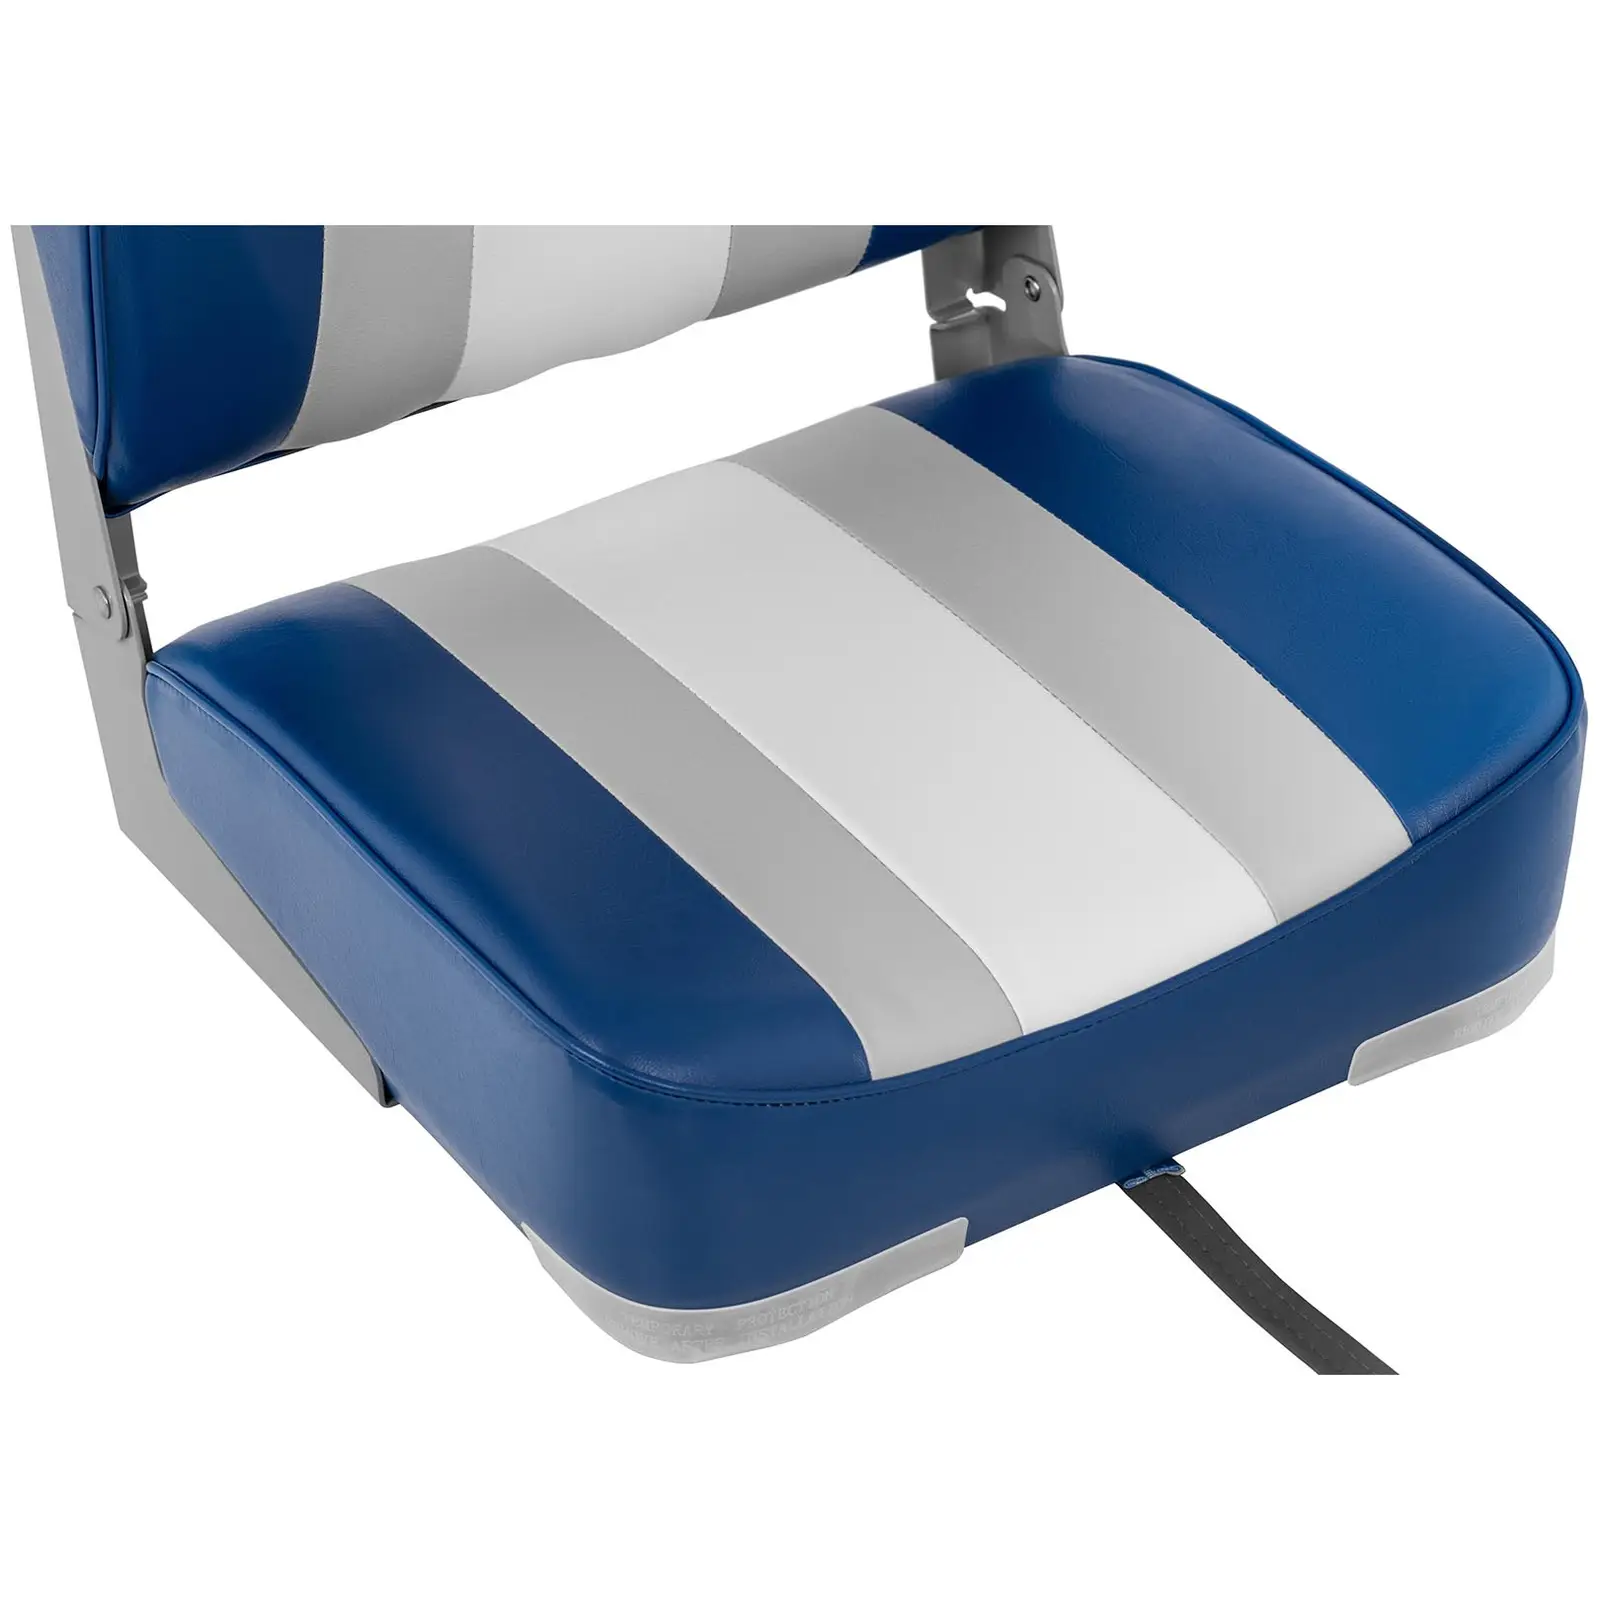 Bootssitz - 36x43x60 cm - Blau, Dunkelgrau, Weiß